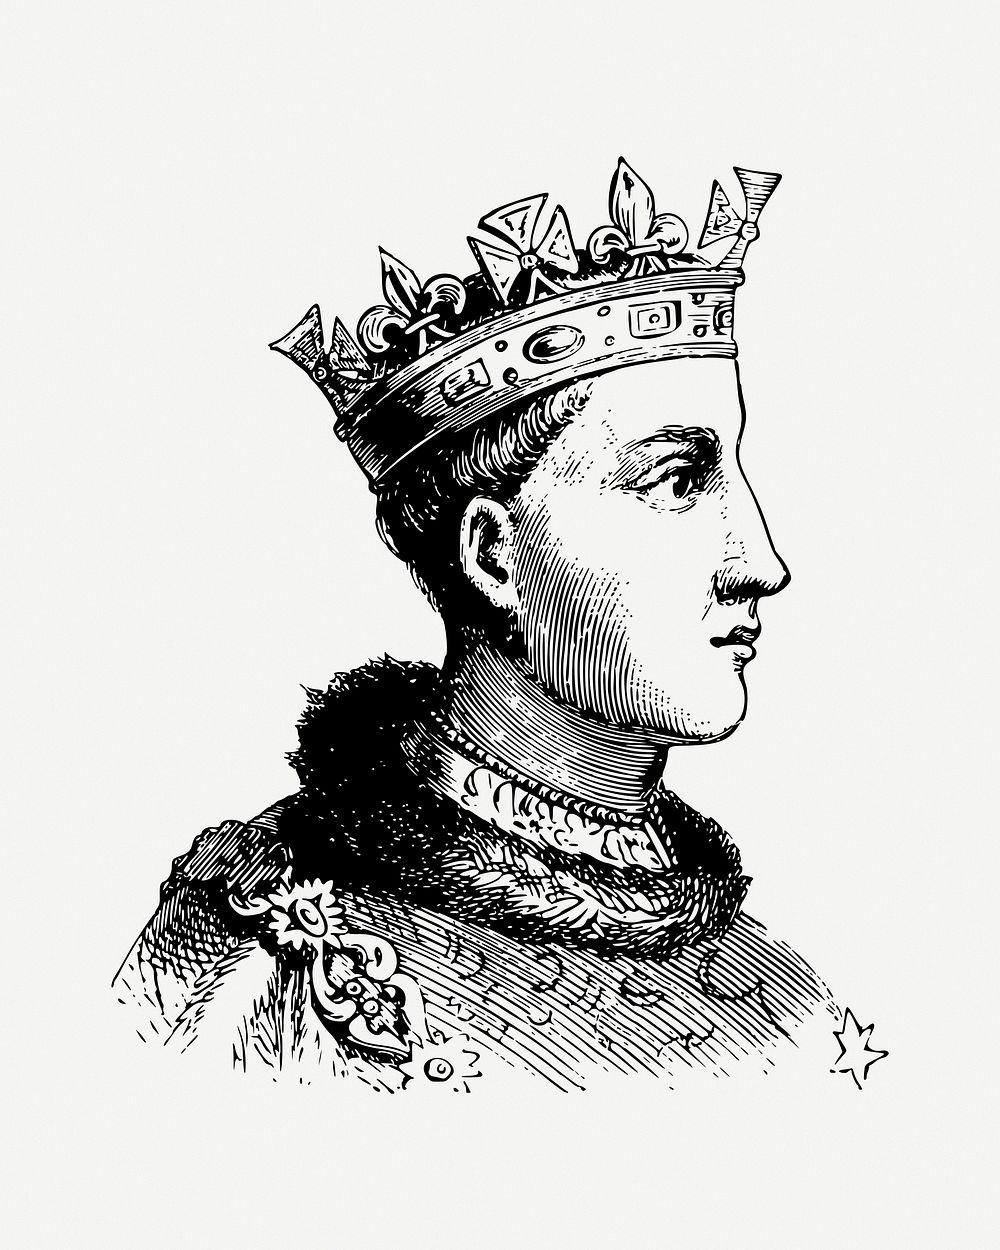 King illustration psd. Free public domain CC0 image.